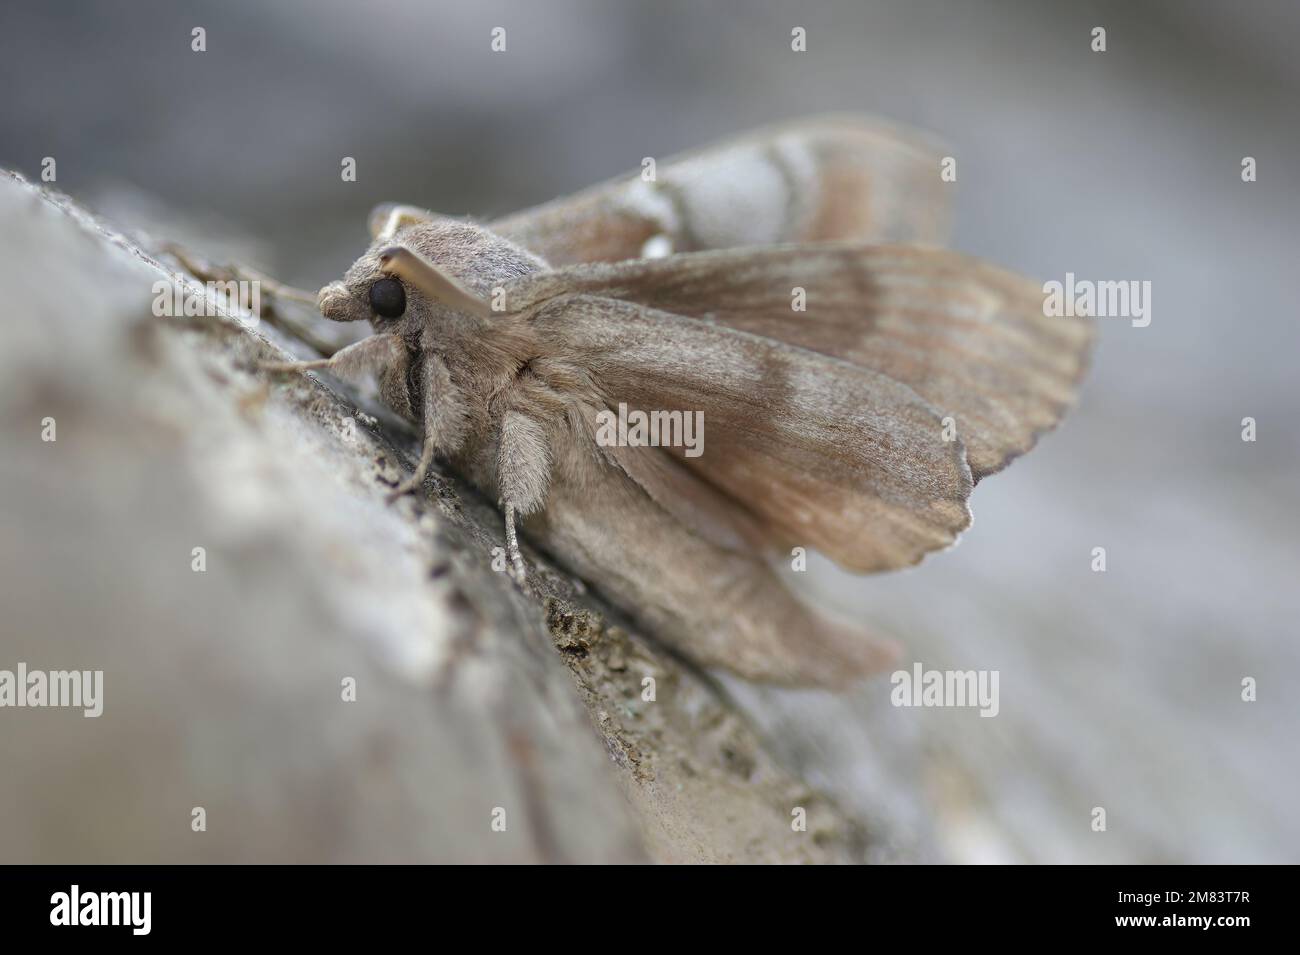 Detailed closeup on the Pine-tree lappet, Dendrolimus pini sitting on wood Stock Photo